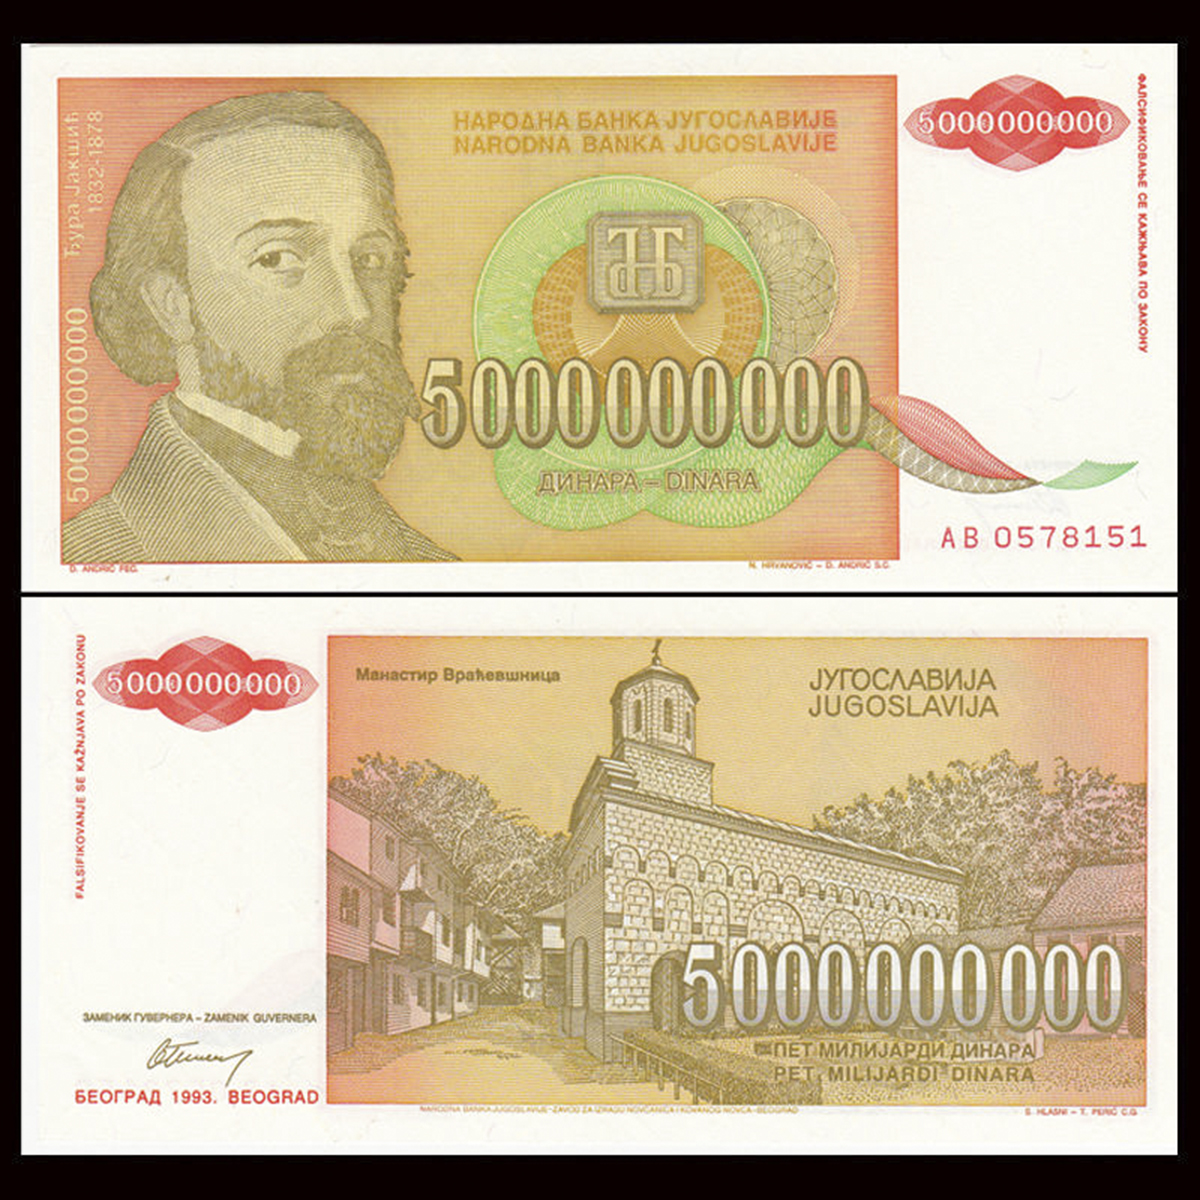 Yugoslavia (Nam Tư) 5000000000 dinara 1993